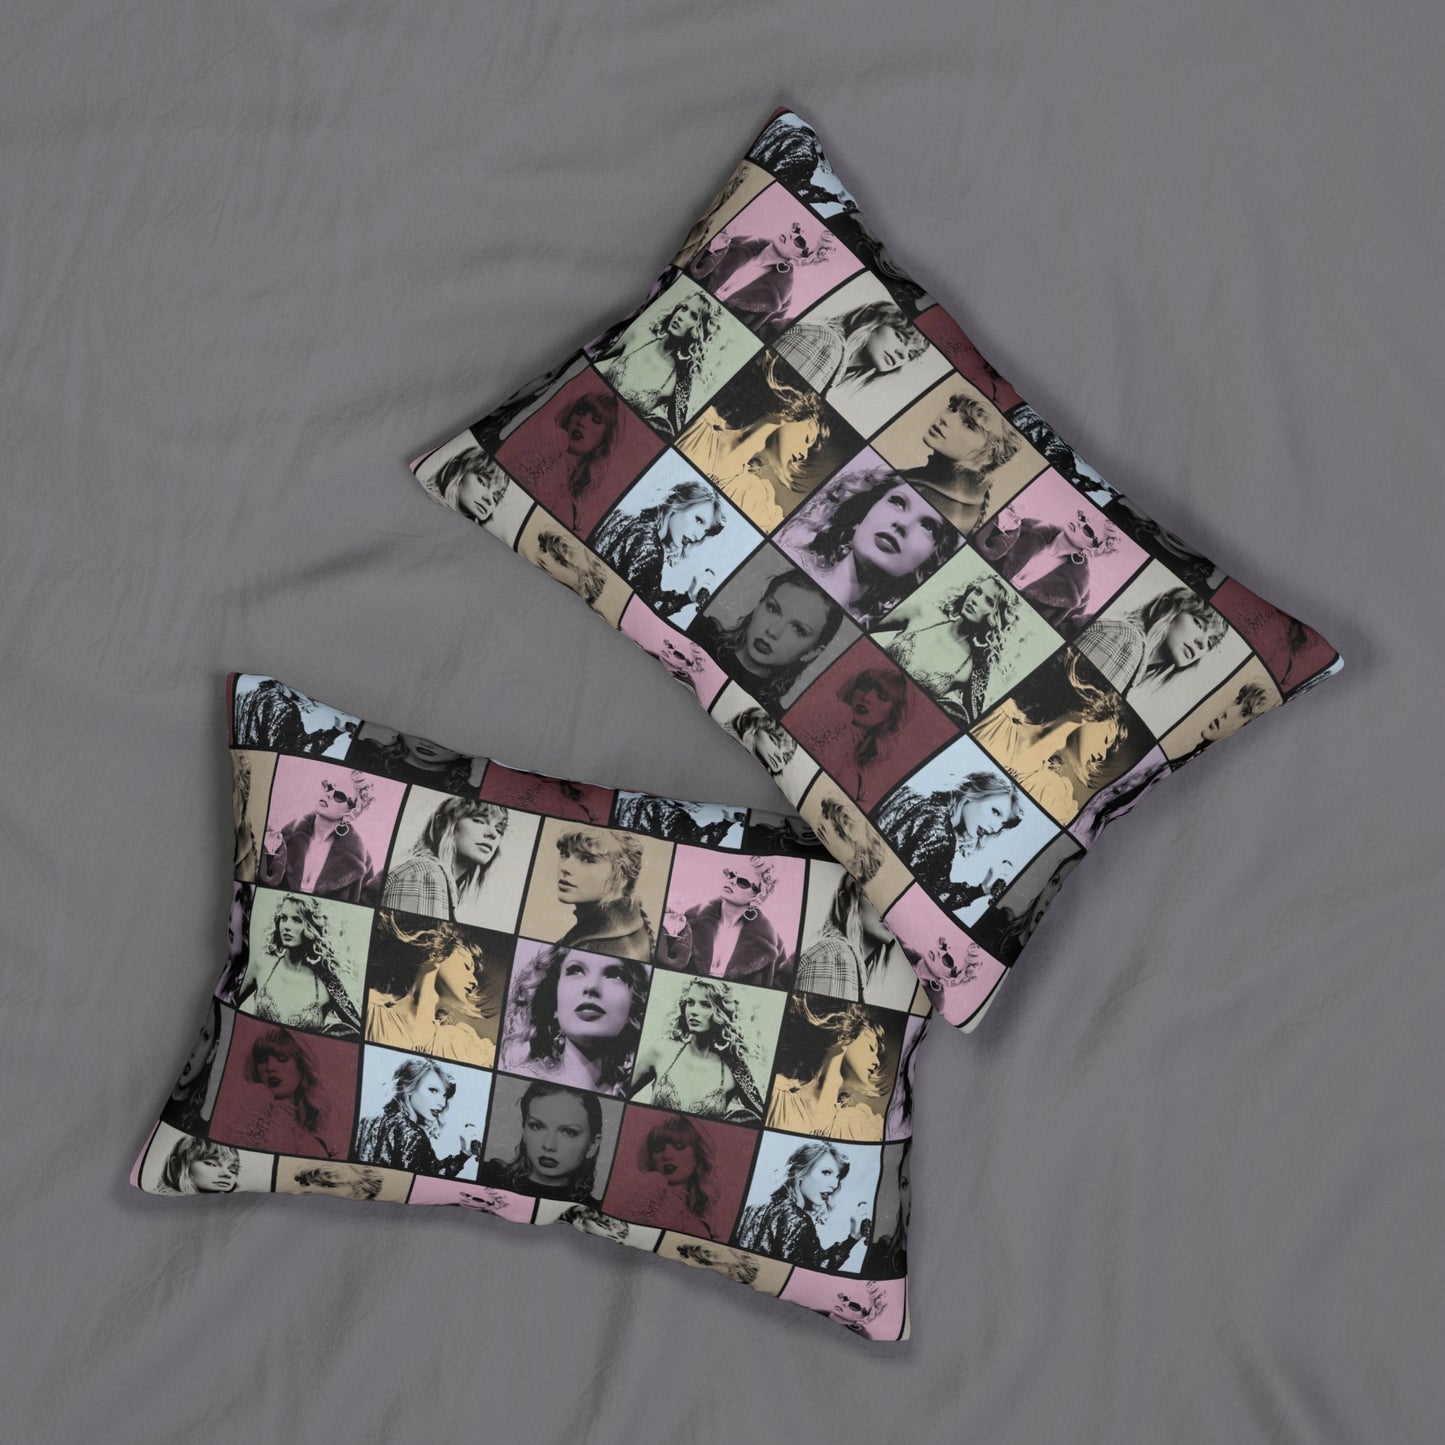 Taylor Swift Eras Collage Polyester Lumbar Pillow